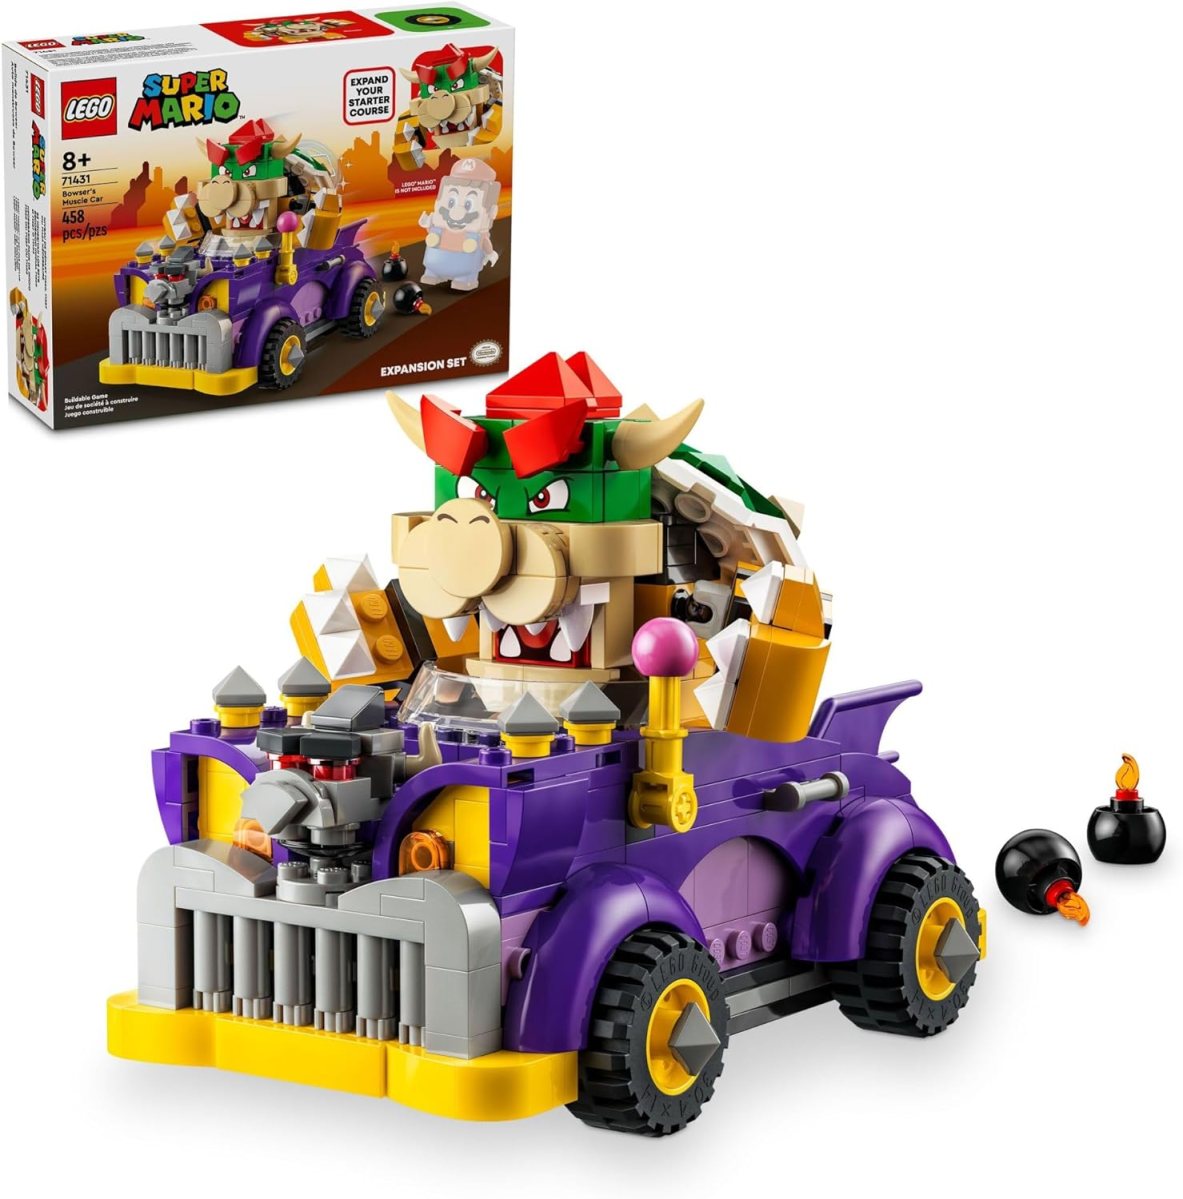 Bowser driving his muscle car Mario Kart LEGO set.